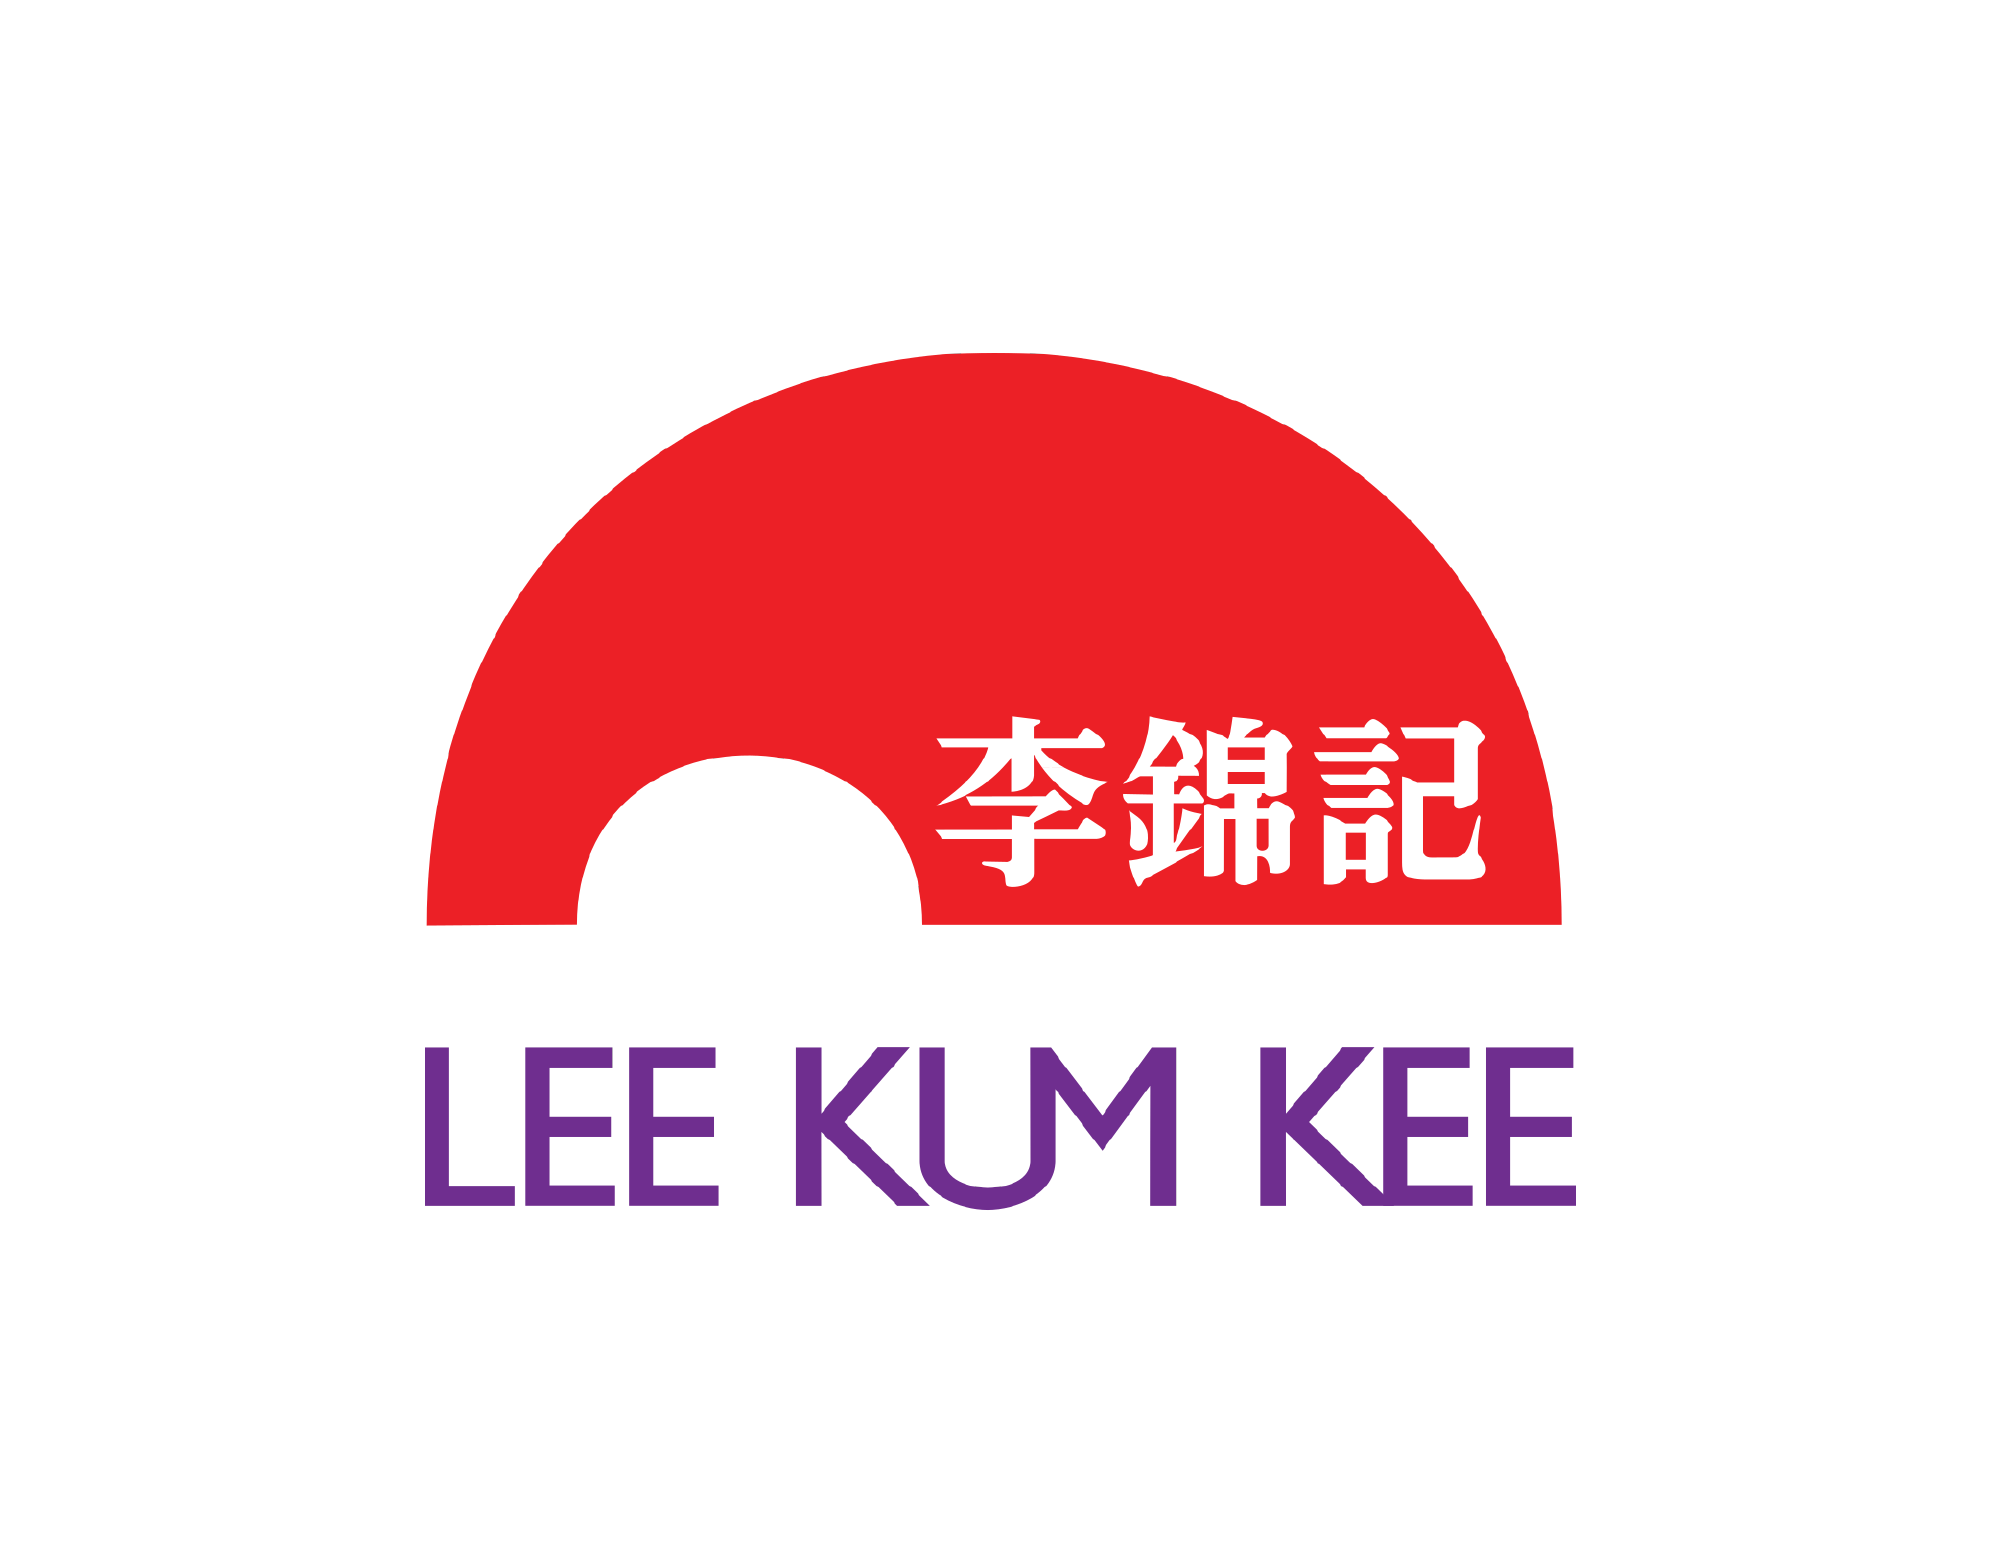 Brand Logo - Lee Kum Kee